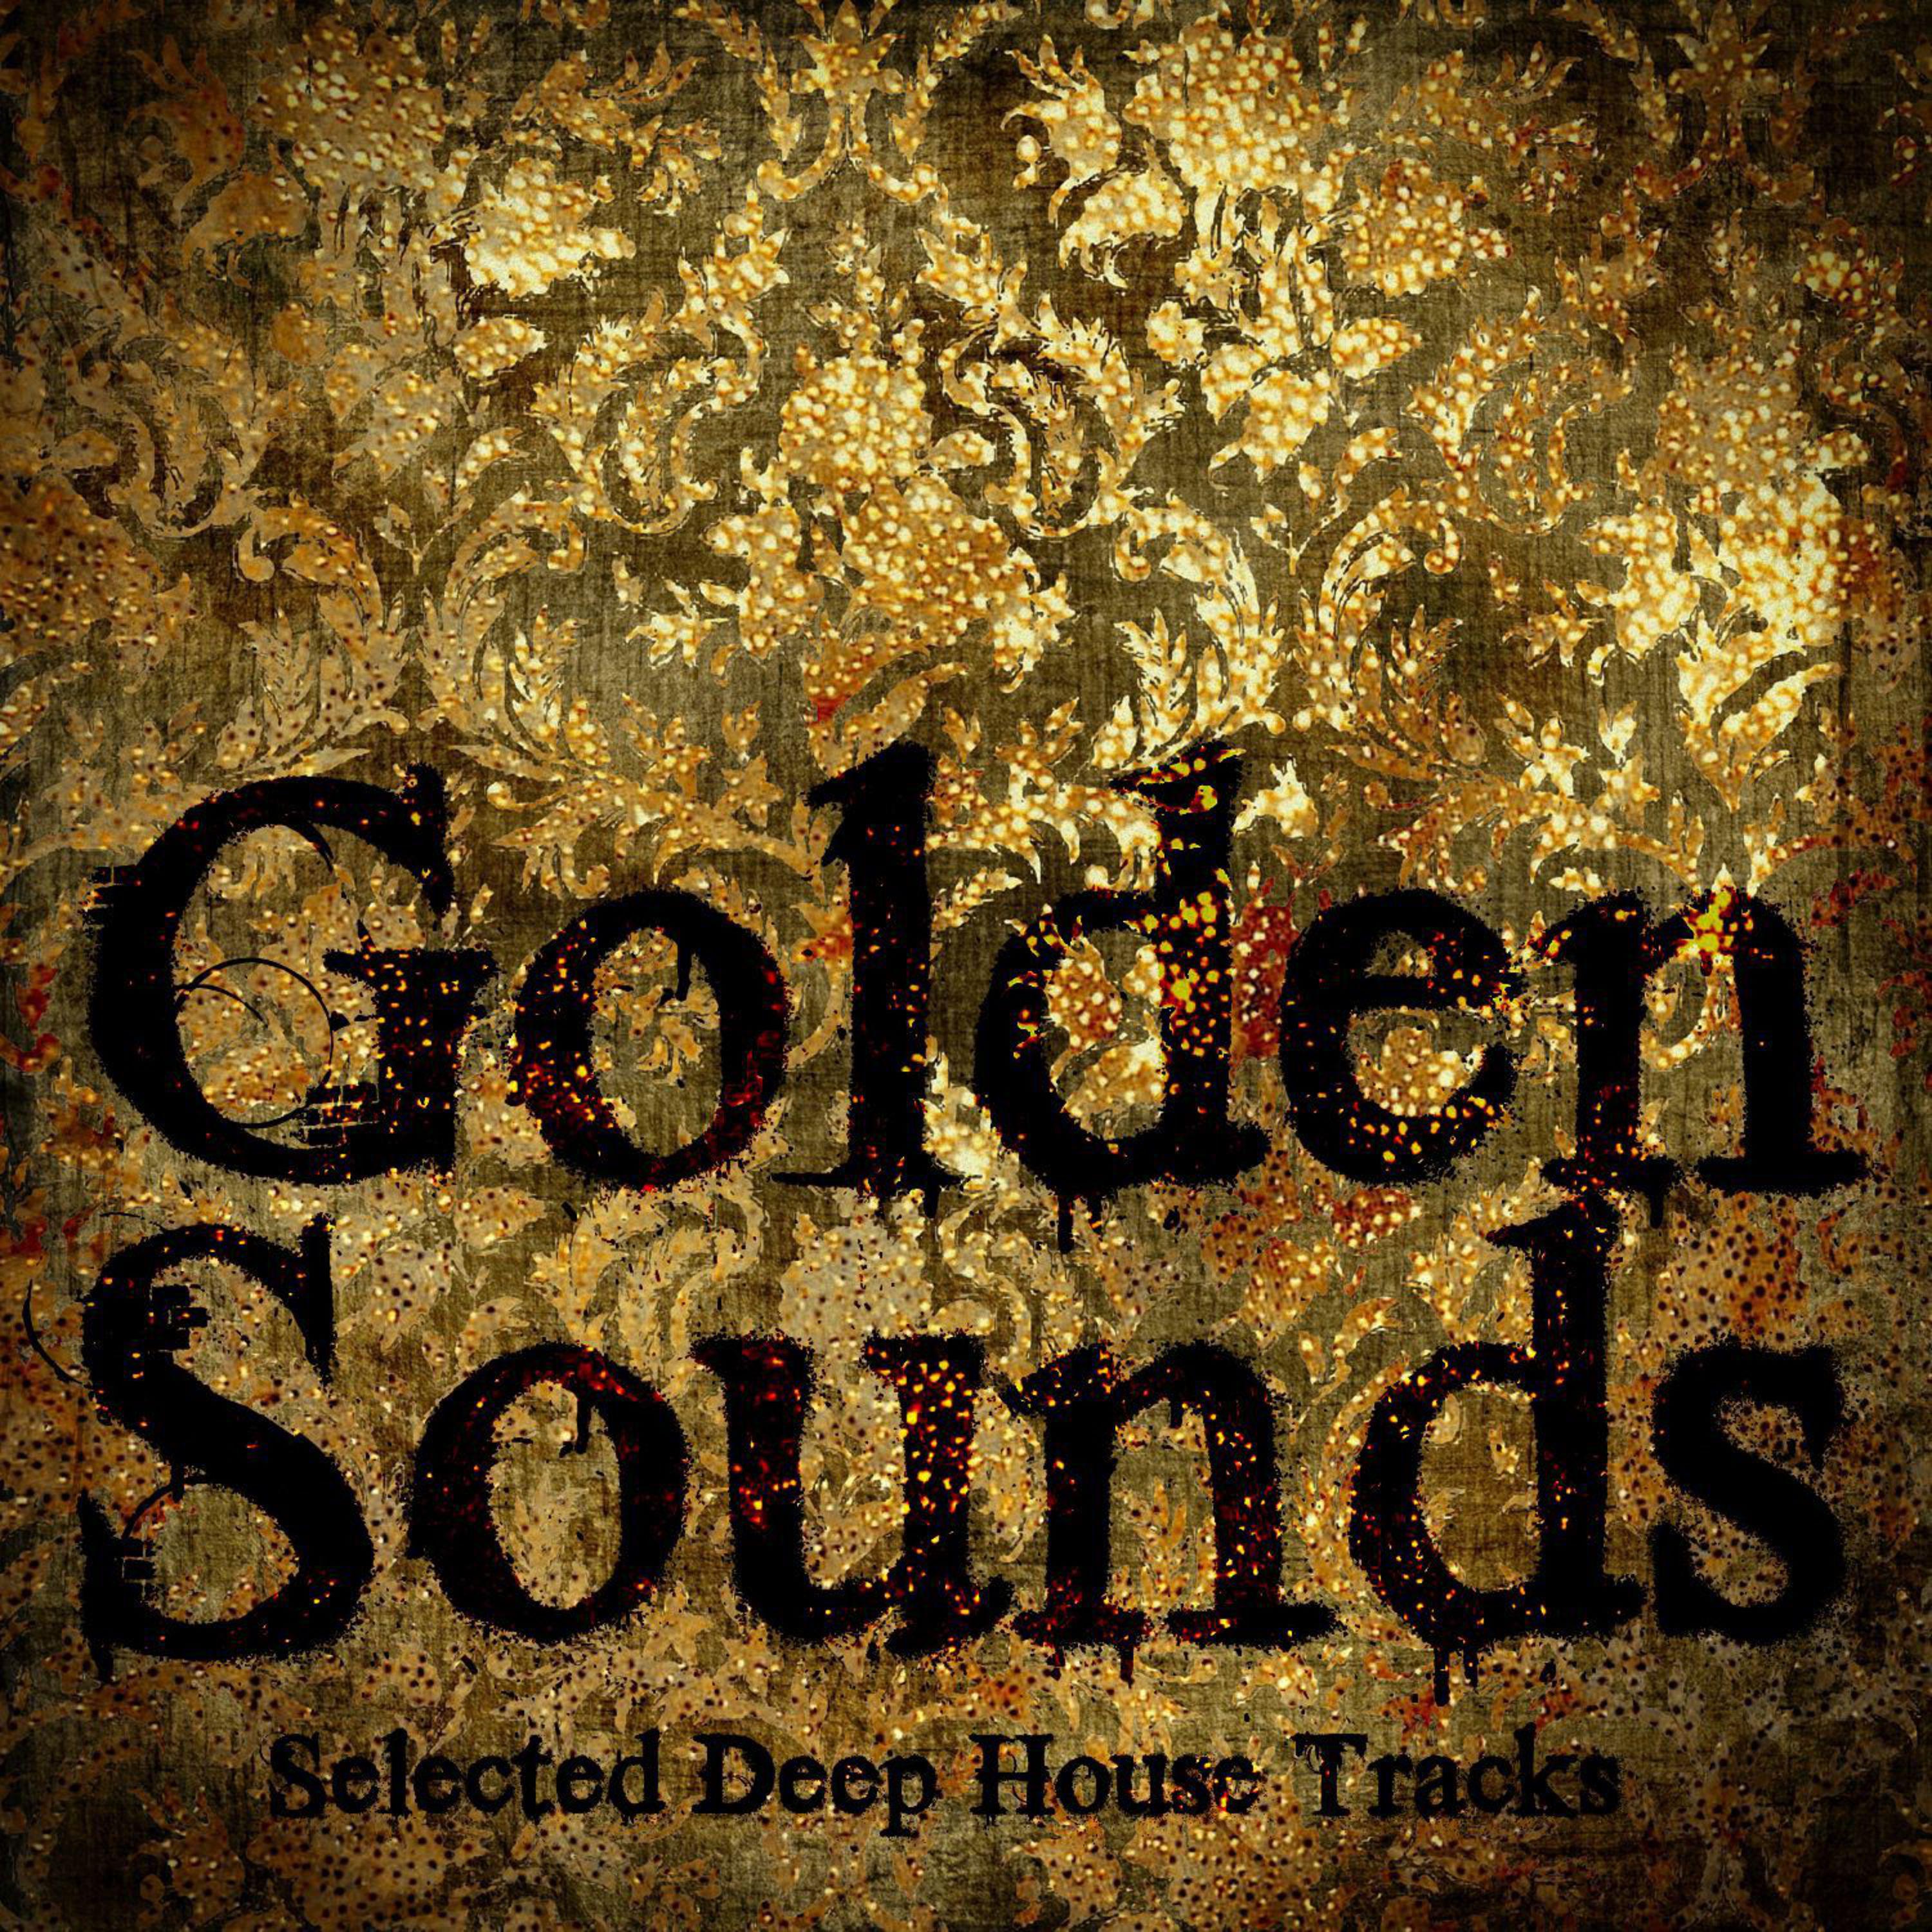 Golden Sounds (Selected Deep House Tracks)